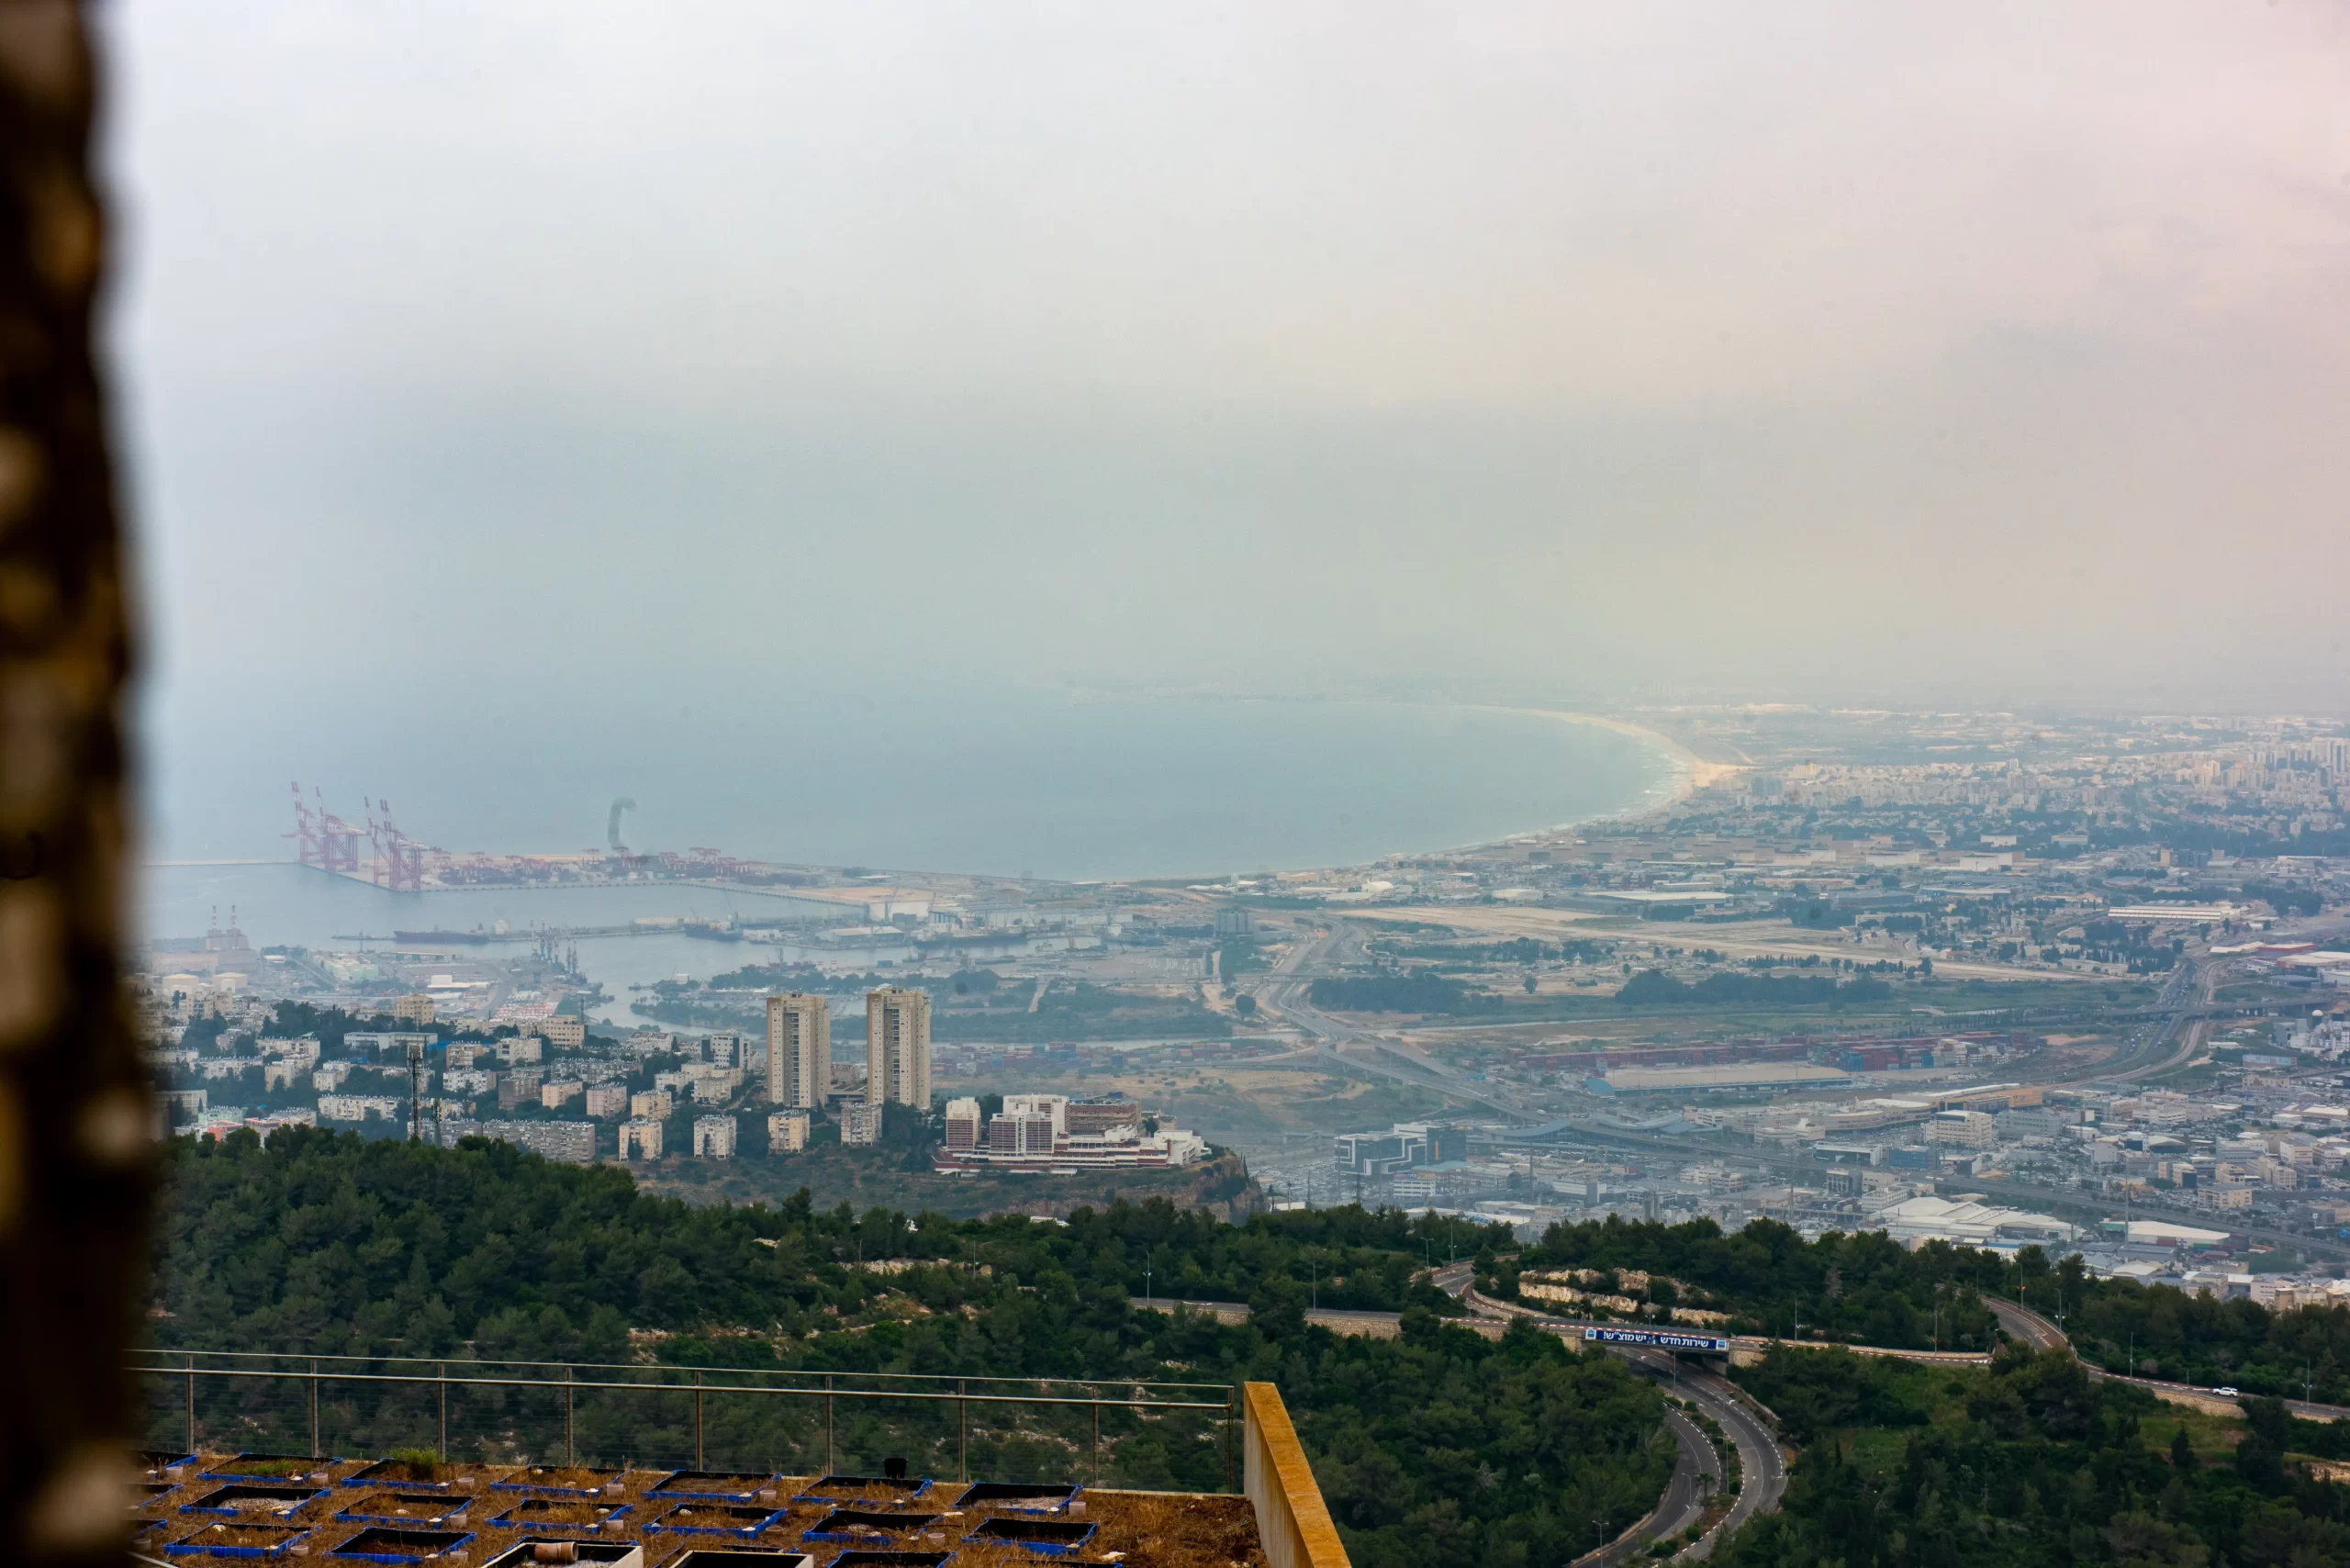 A view of Haifa Bay and port from the University of Haifa campus on Mount Carmel, April 2024. Credit: Marinella Bandini